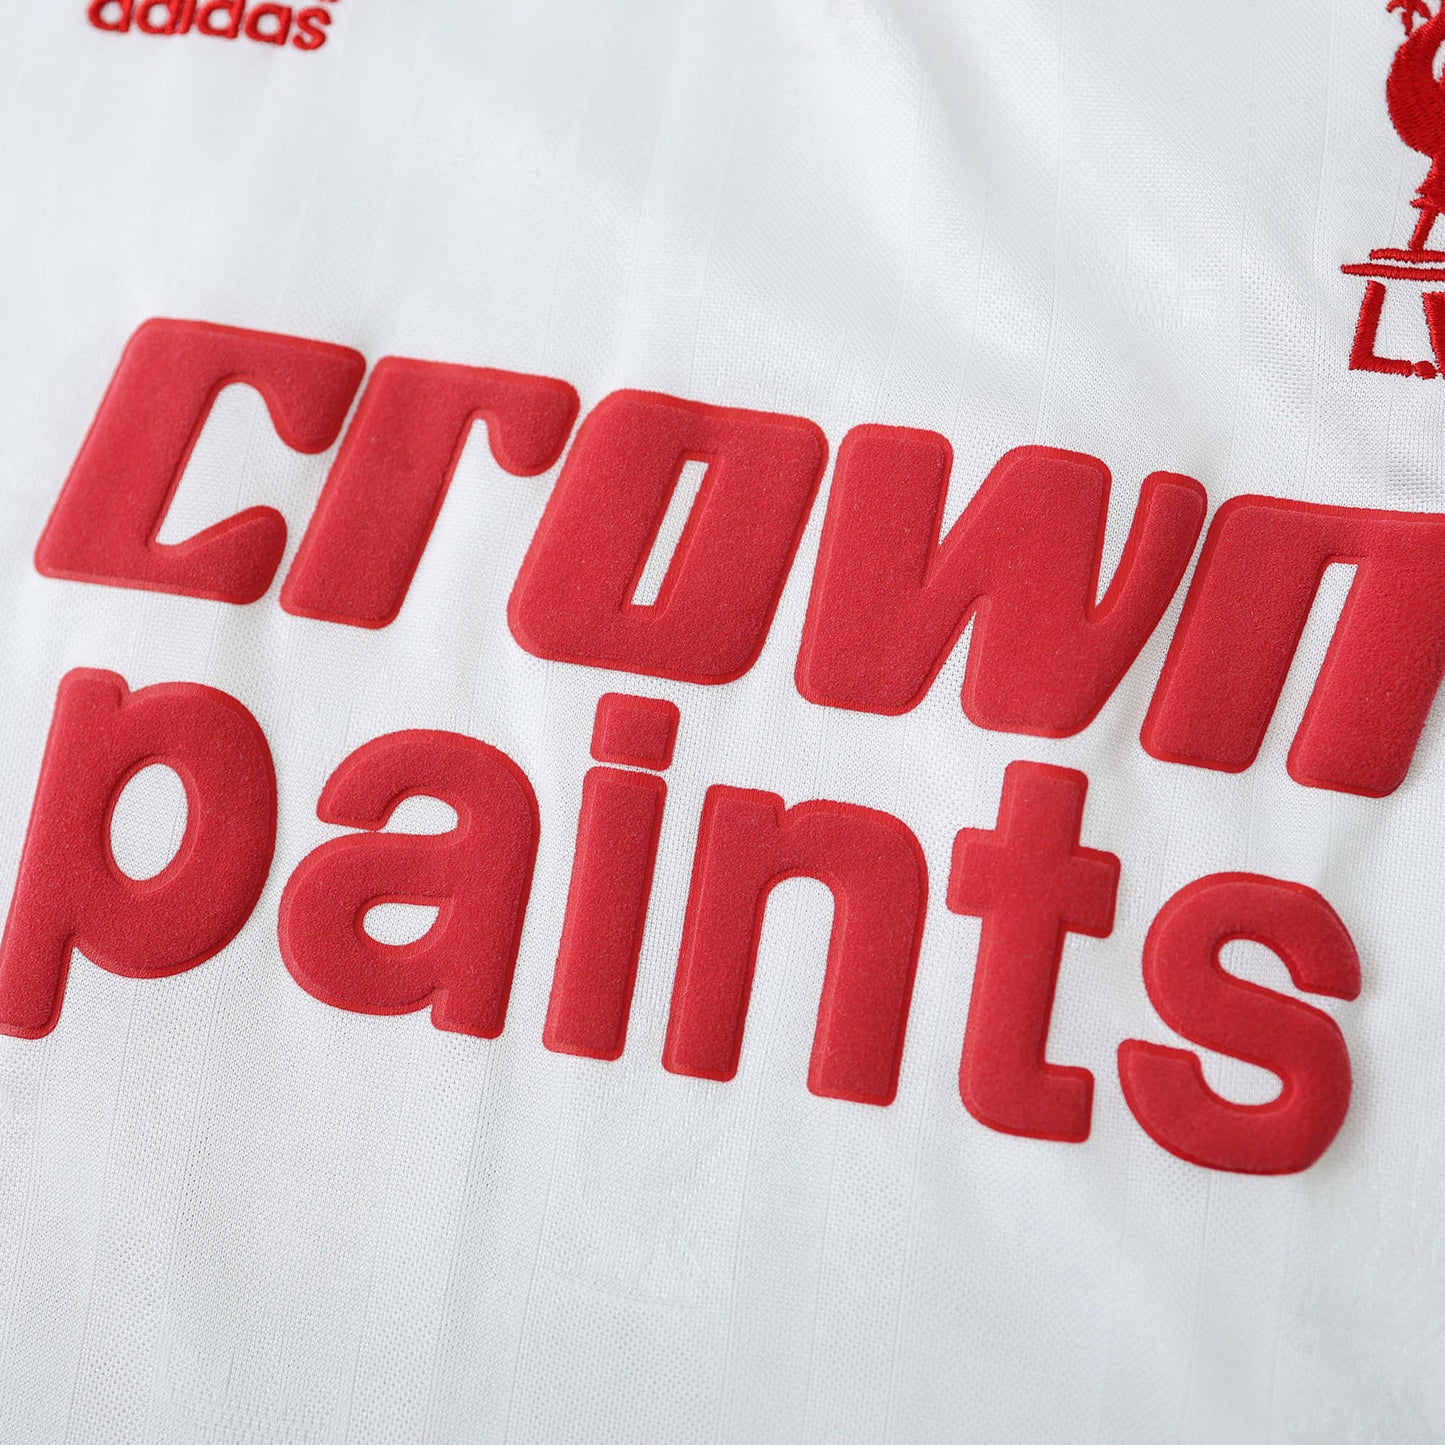 Liverpool FC 86-87 Away Shirt